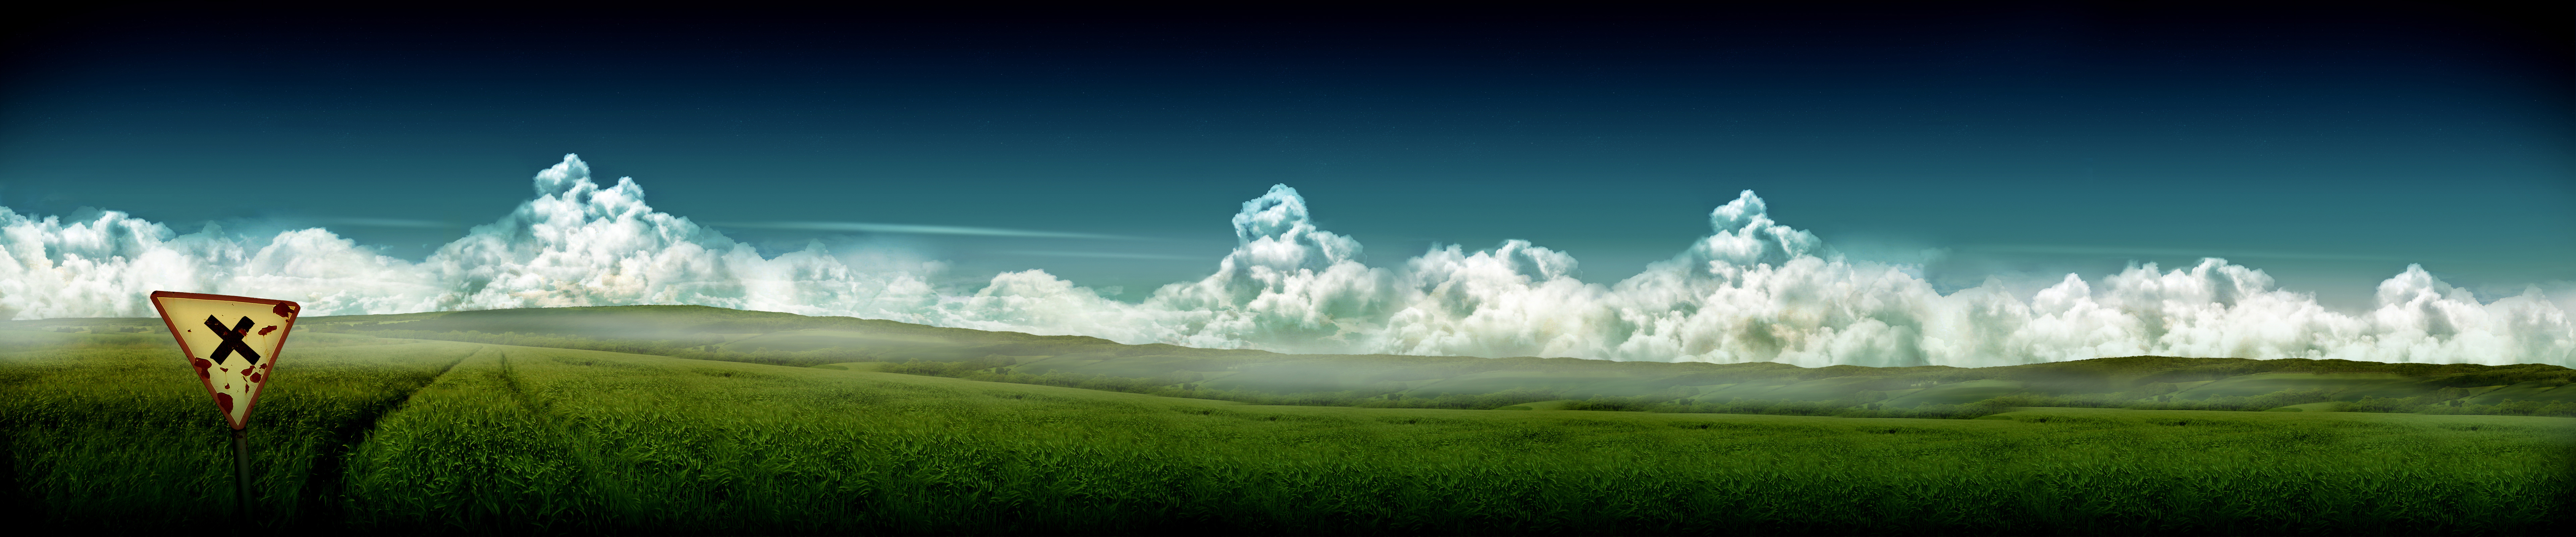 home zone wallpaper,sky,cloud,grassland,nature,daytime